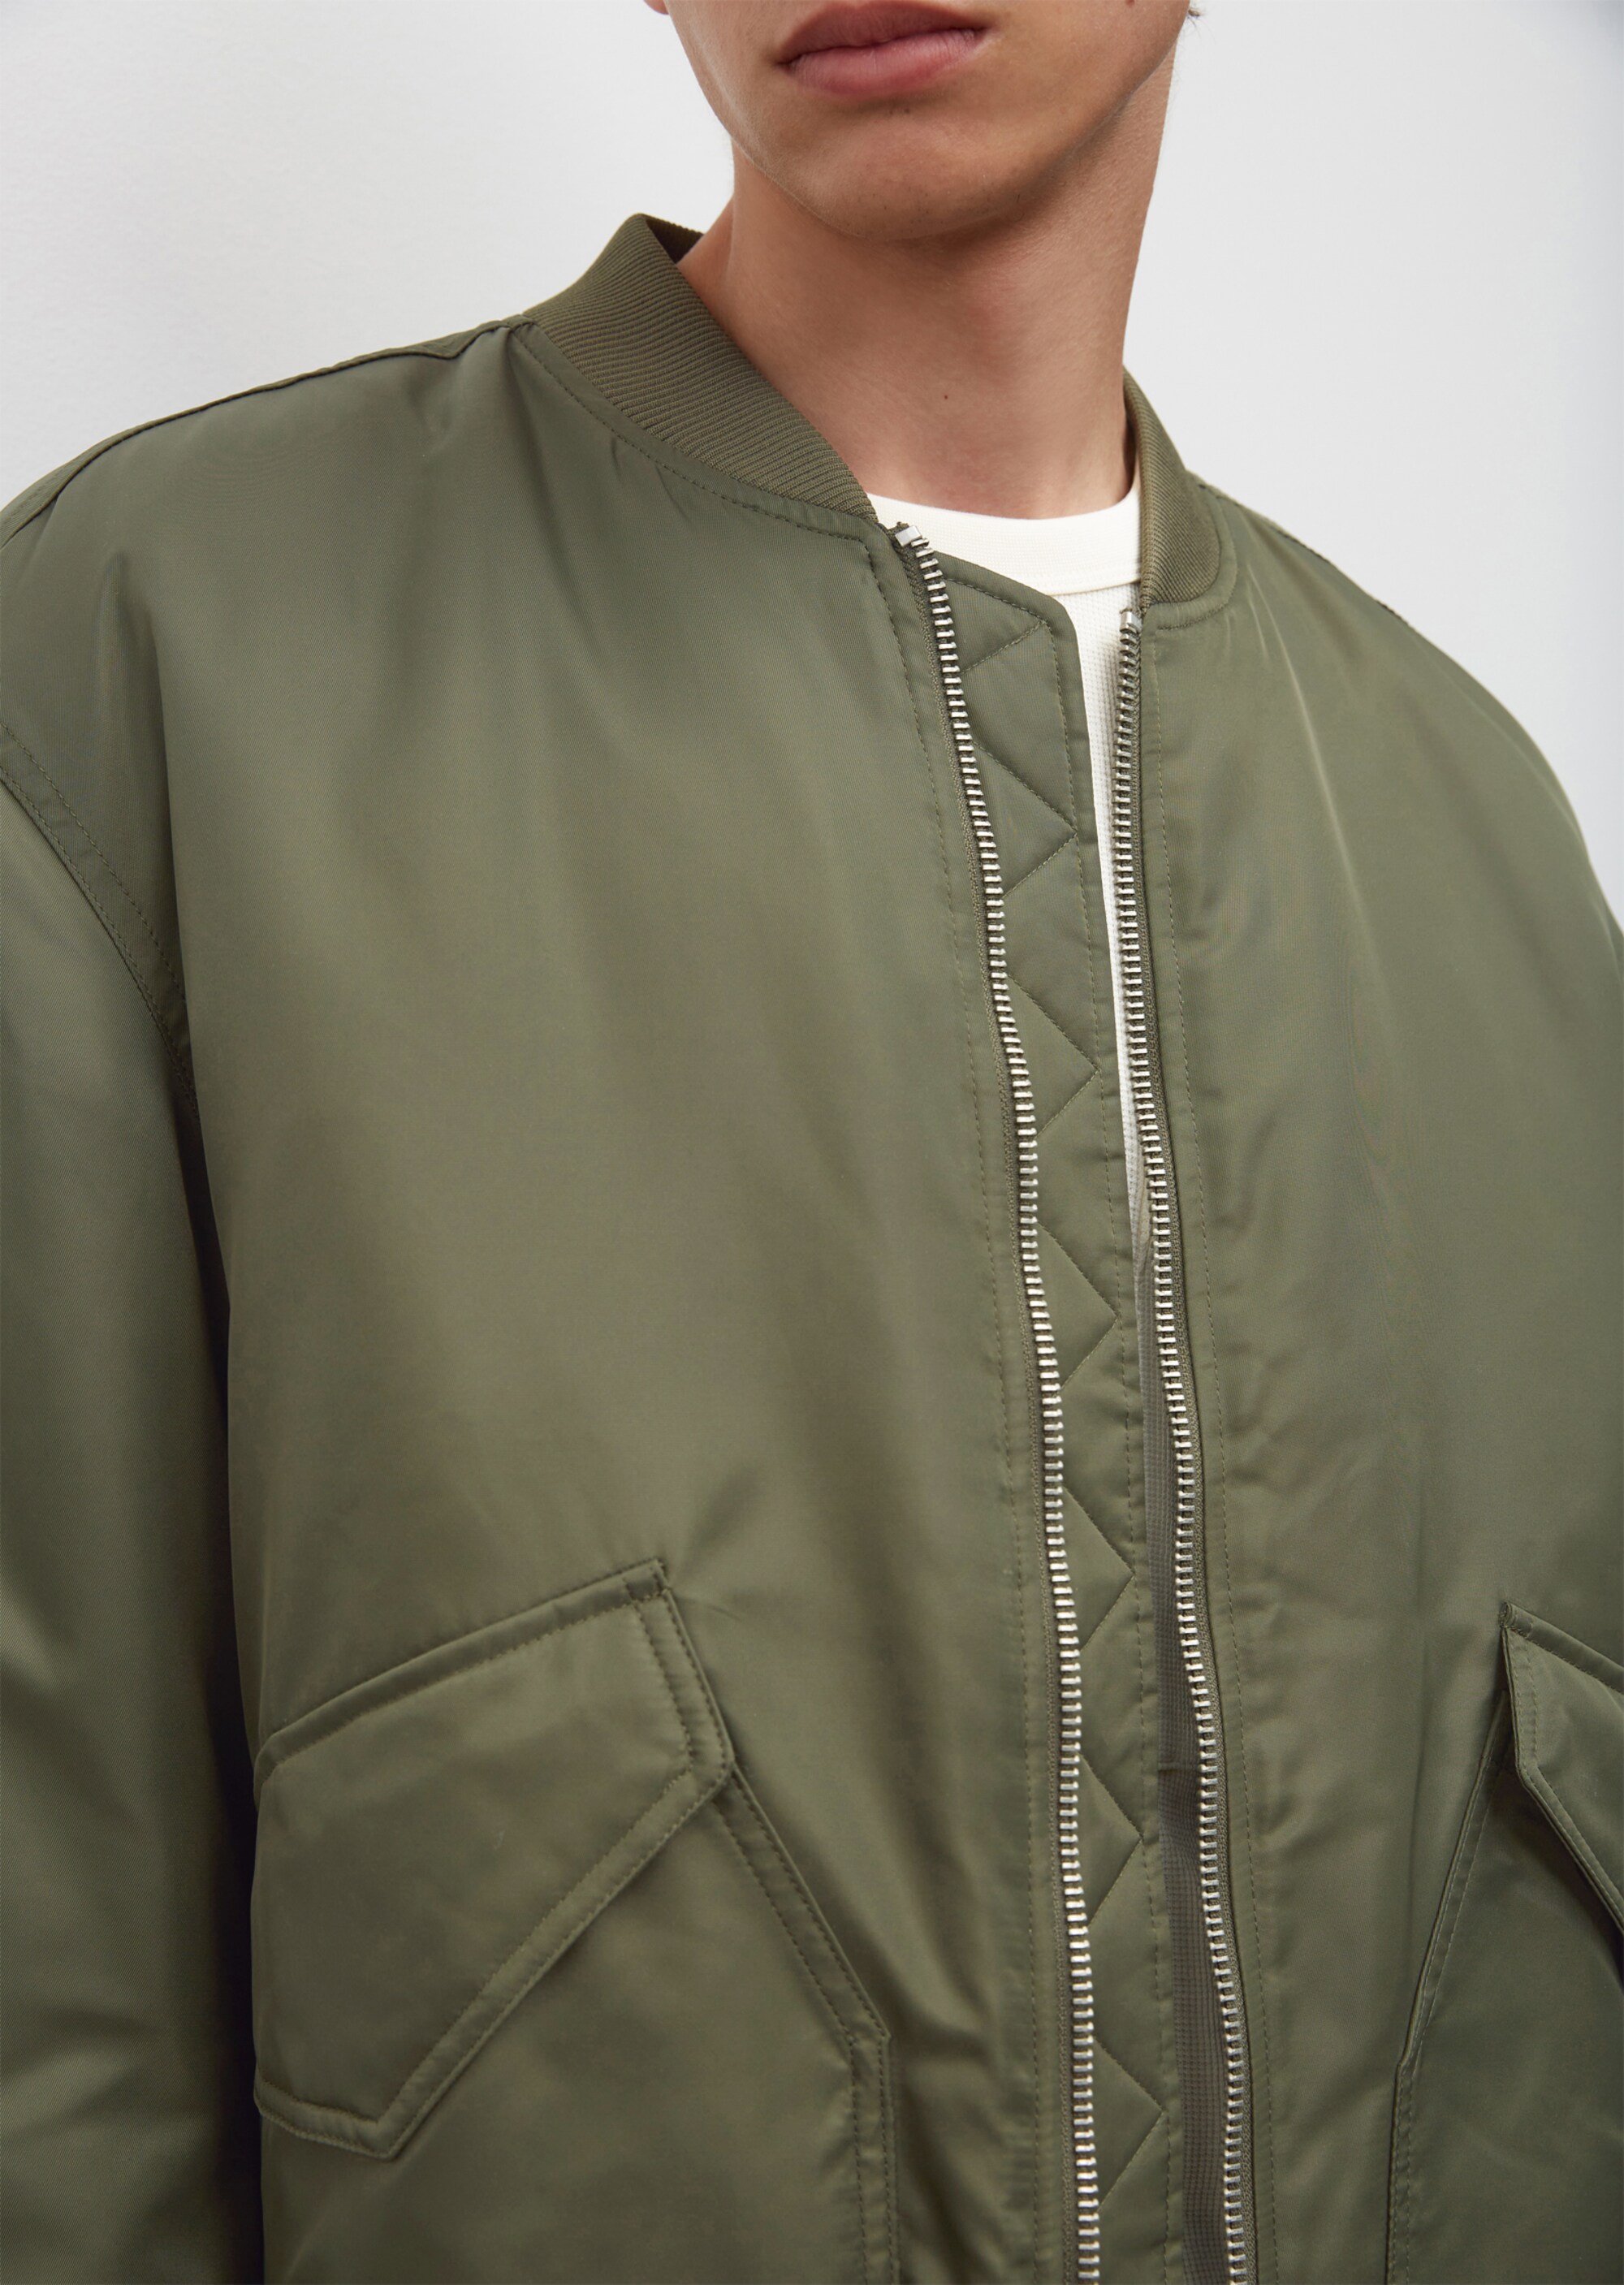 Bomber jacket made of shiny, recycled nylon fabric